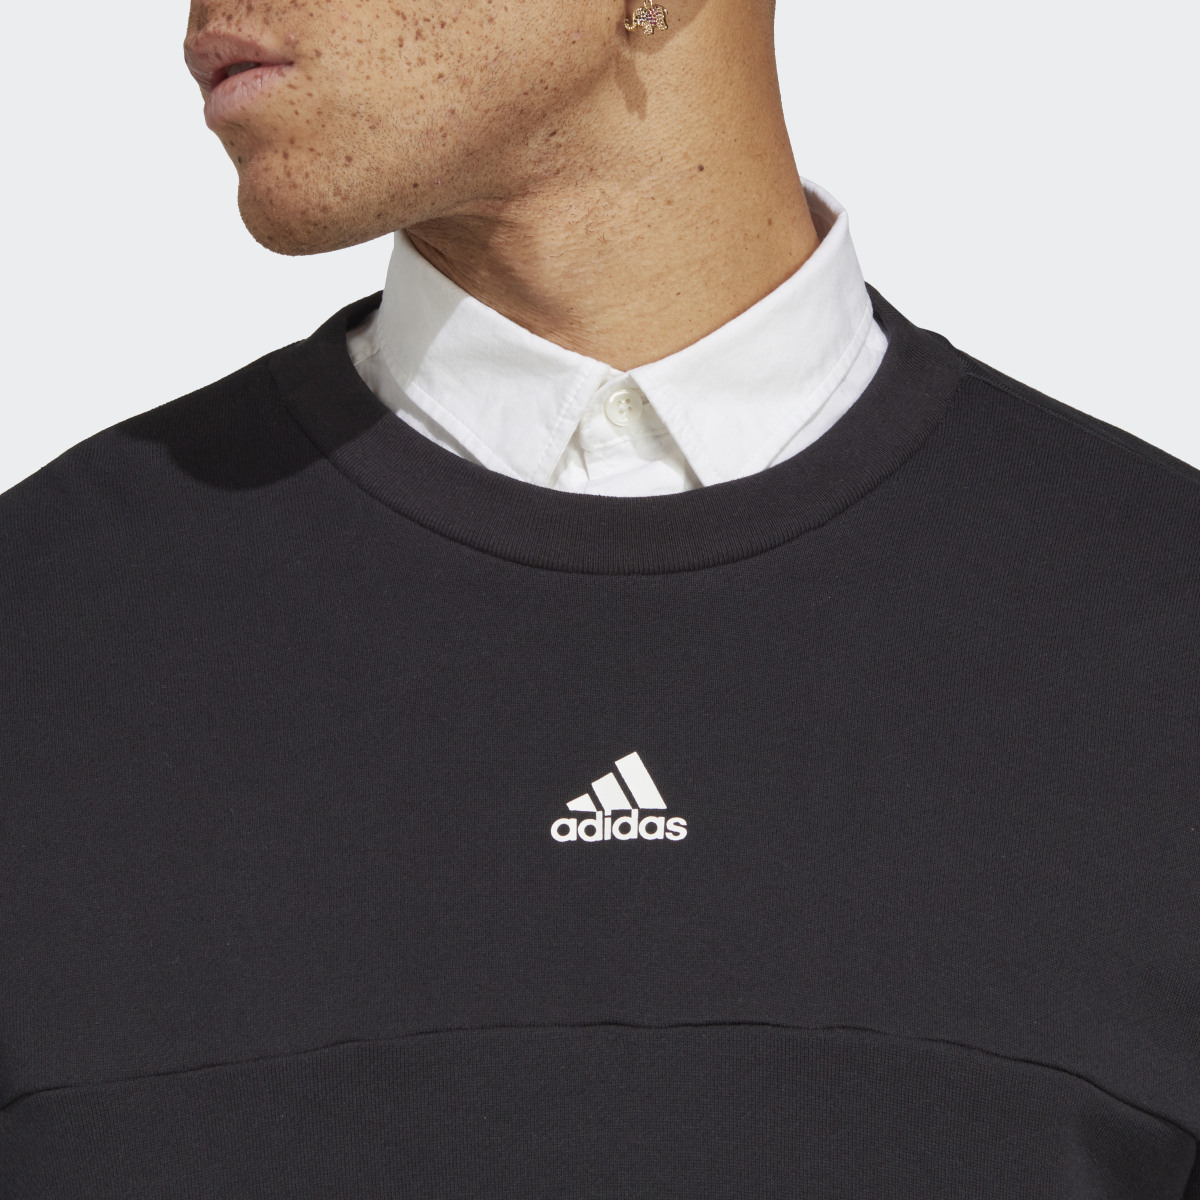 Adidas Brand Love Sweatshirt. 6